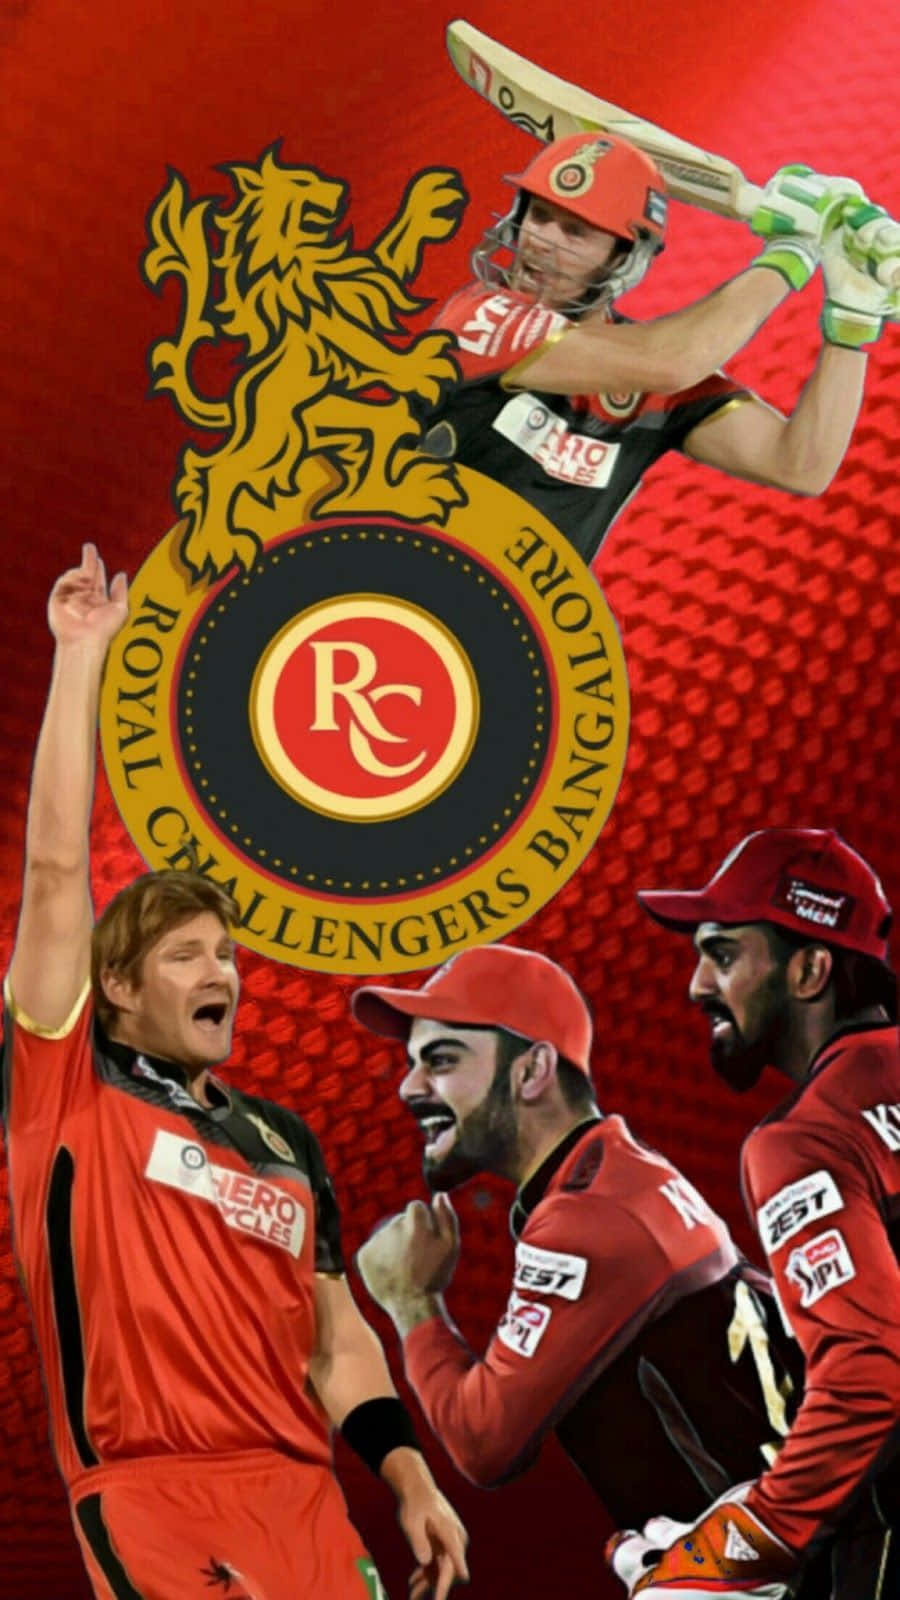 Royal Challengers Bangalore Team Celebrates A Victory